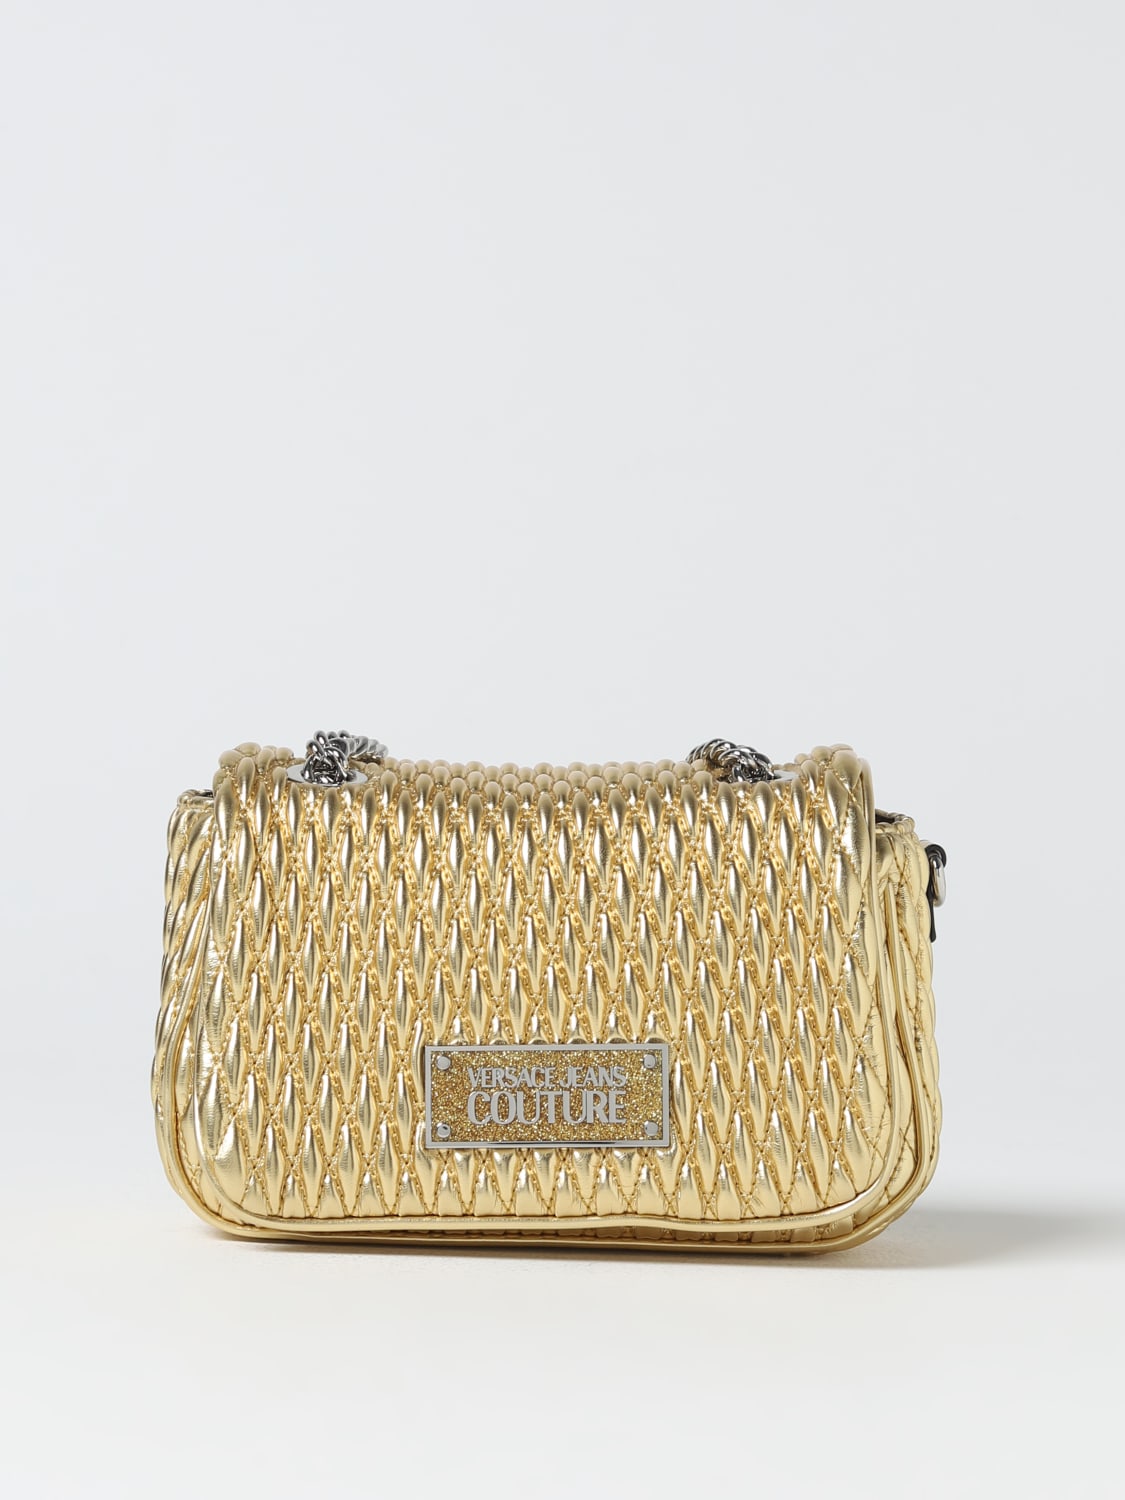 Versace Jeans Couture Golden Crossbody Bag